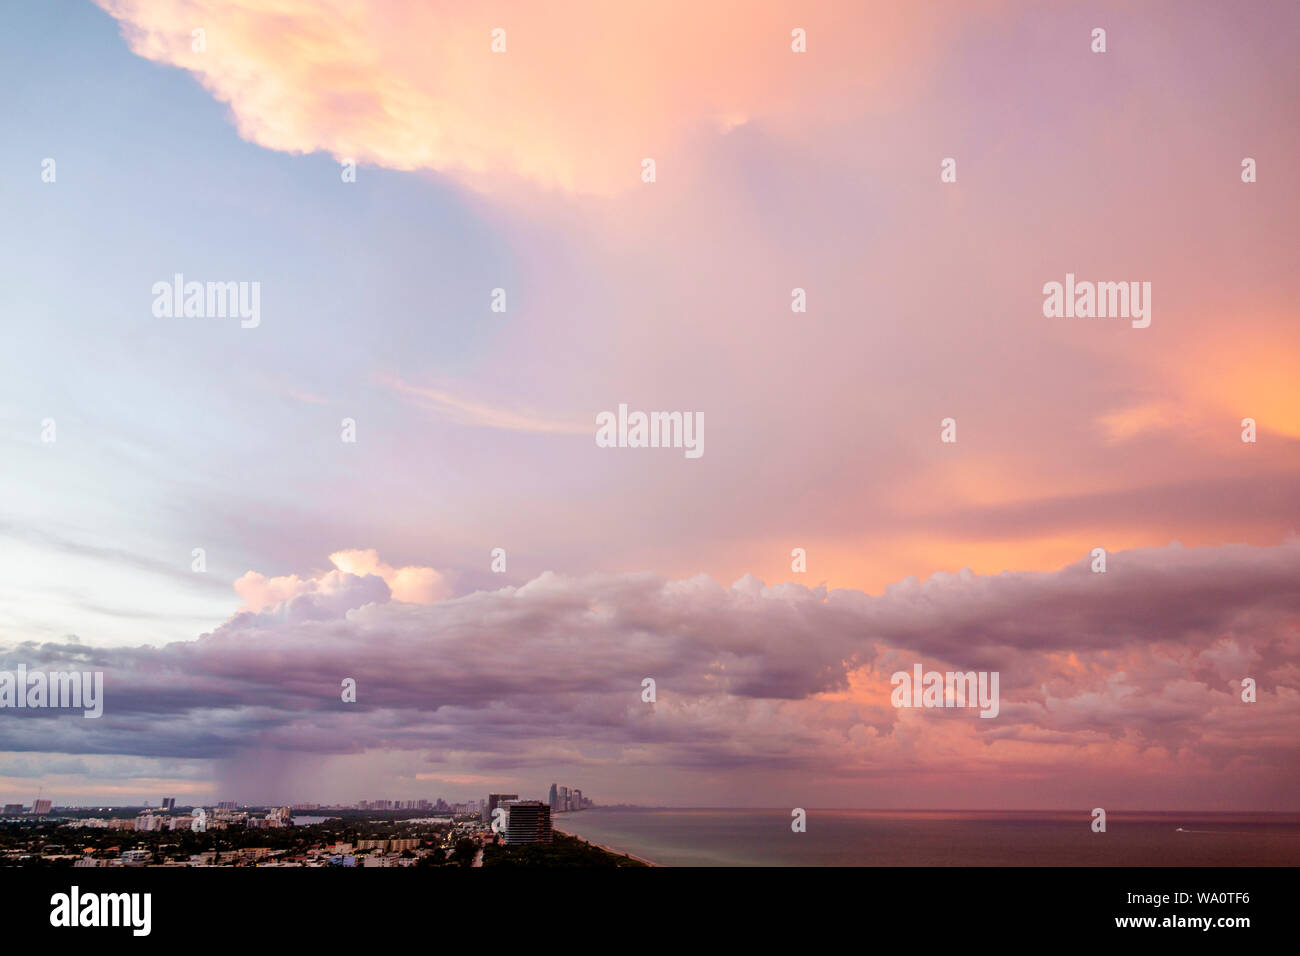 Miami Beach Florida,Oceano Atlantico,nuvole cielo meteo,tramonto,nuvole tempesta,pioggia,FL190731022 Foto Stock